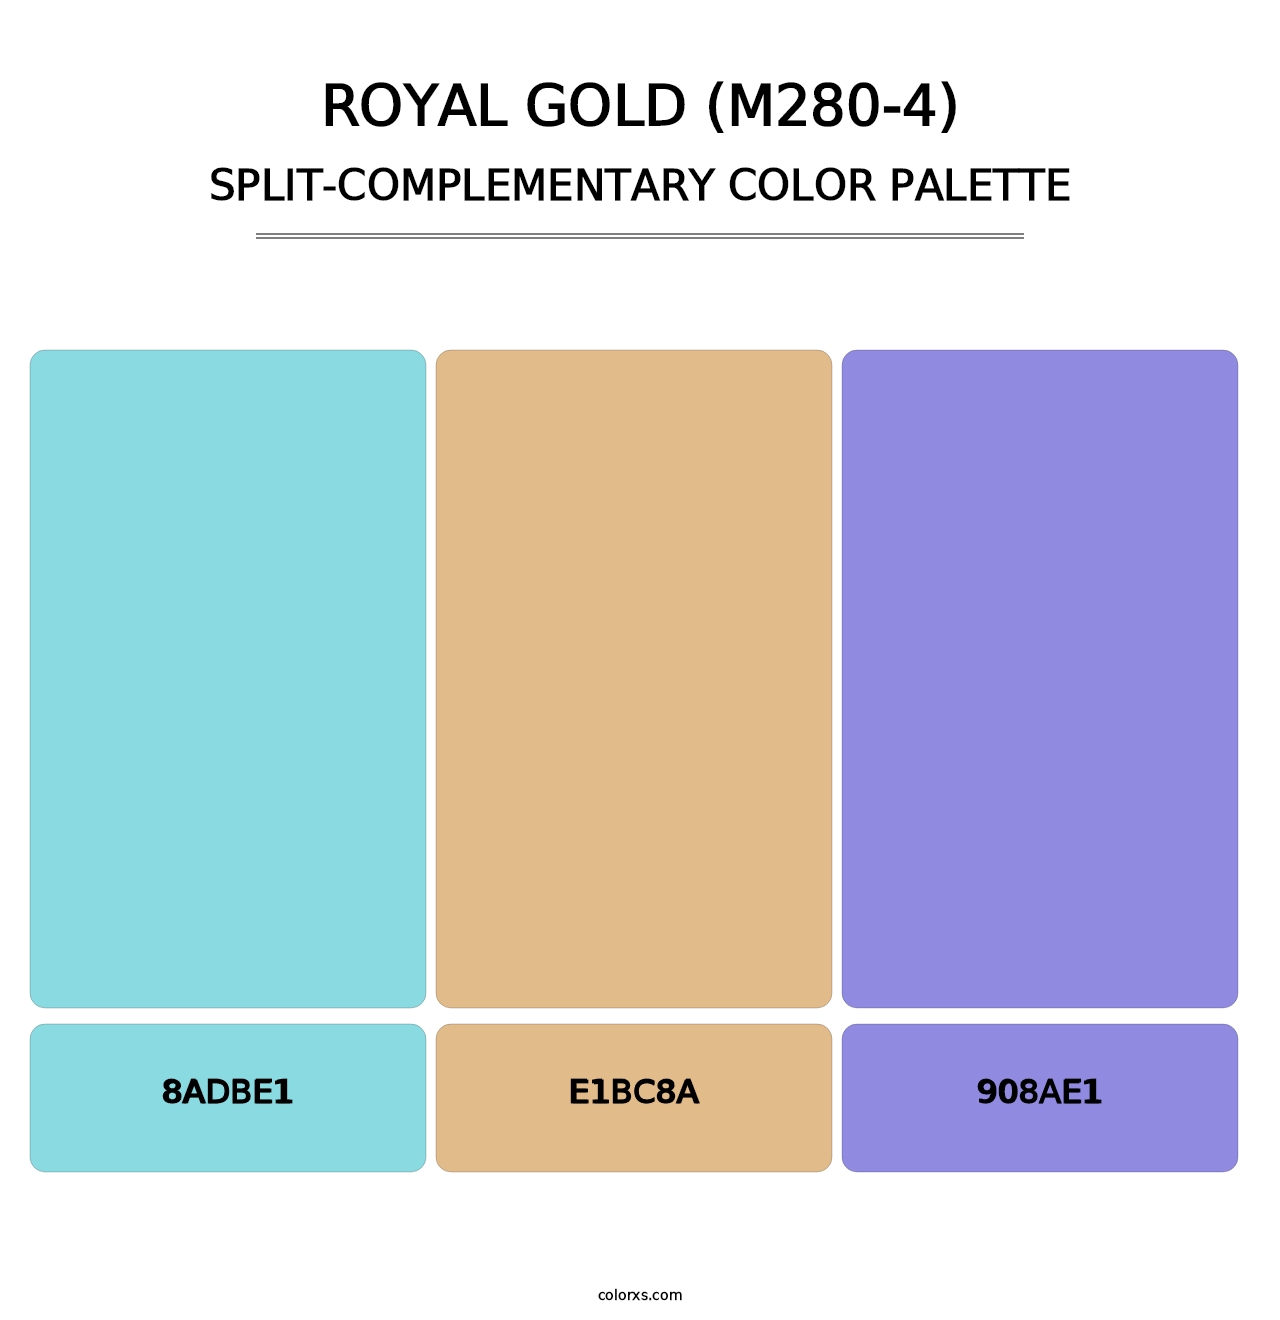 Royal Gold (M280-4) - Split-Complementary Color Palette